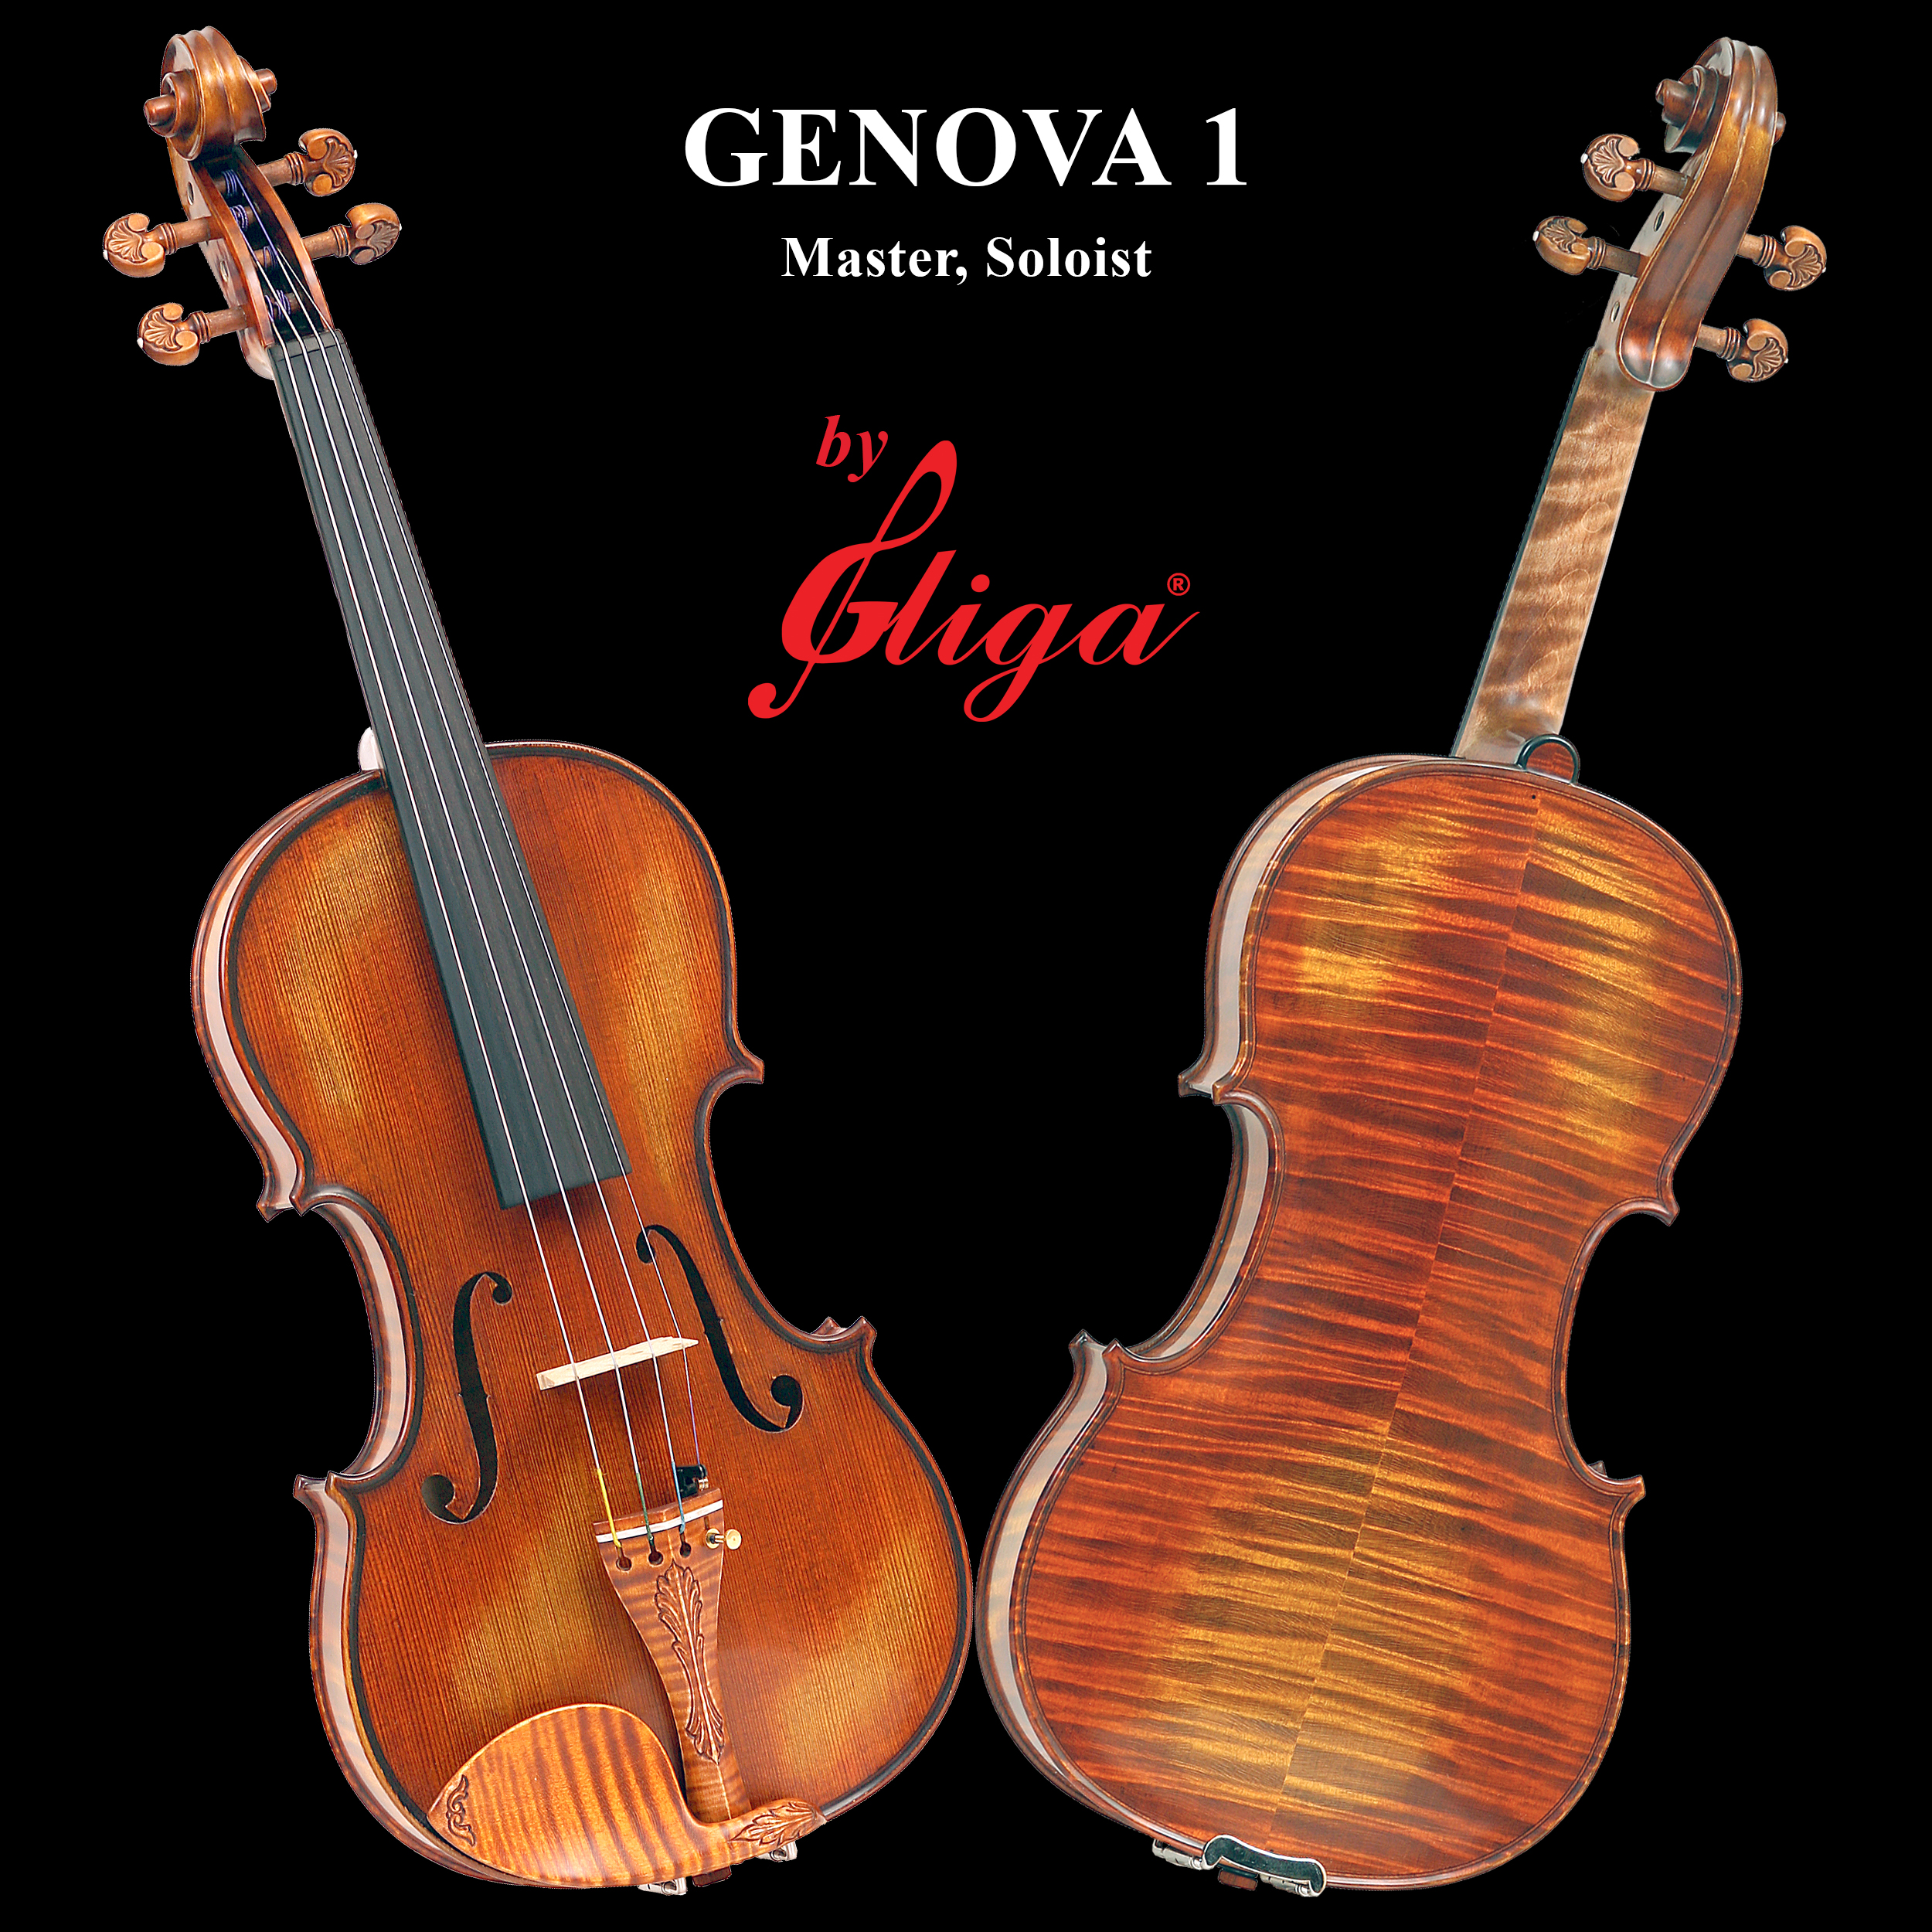 Master Gliga 'GENOVA 1' Violins